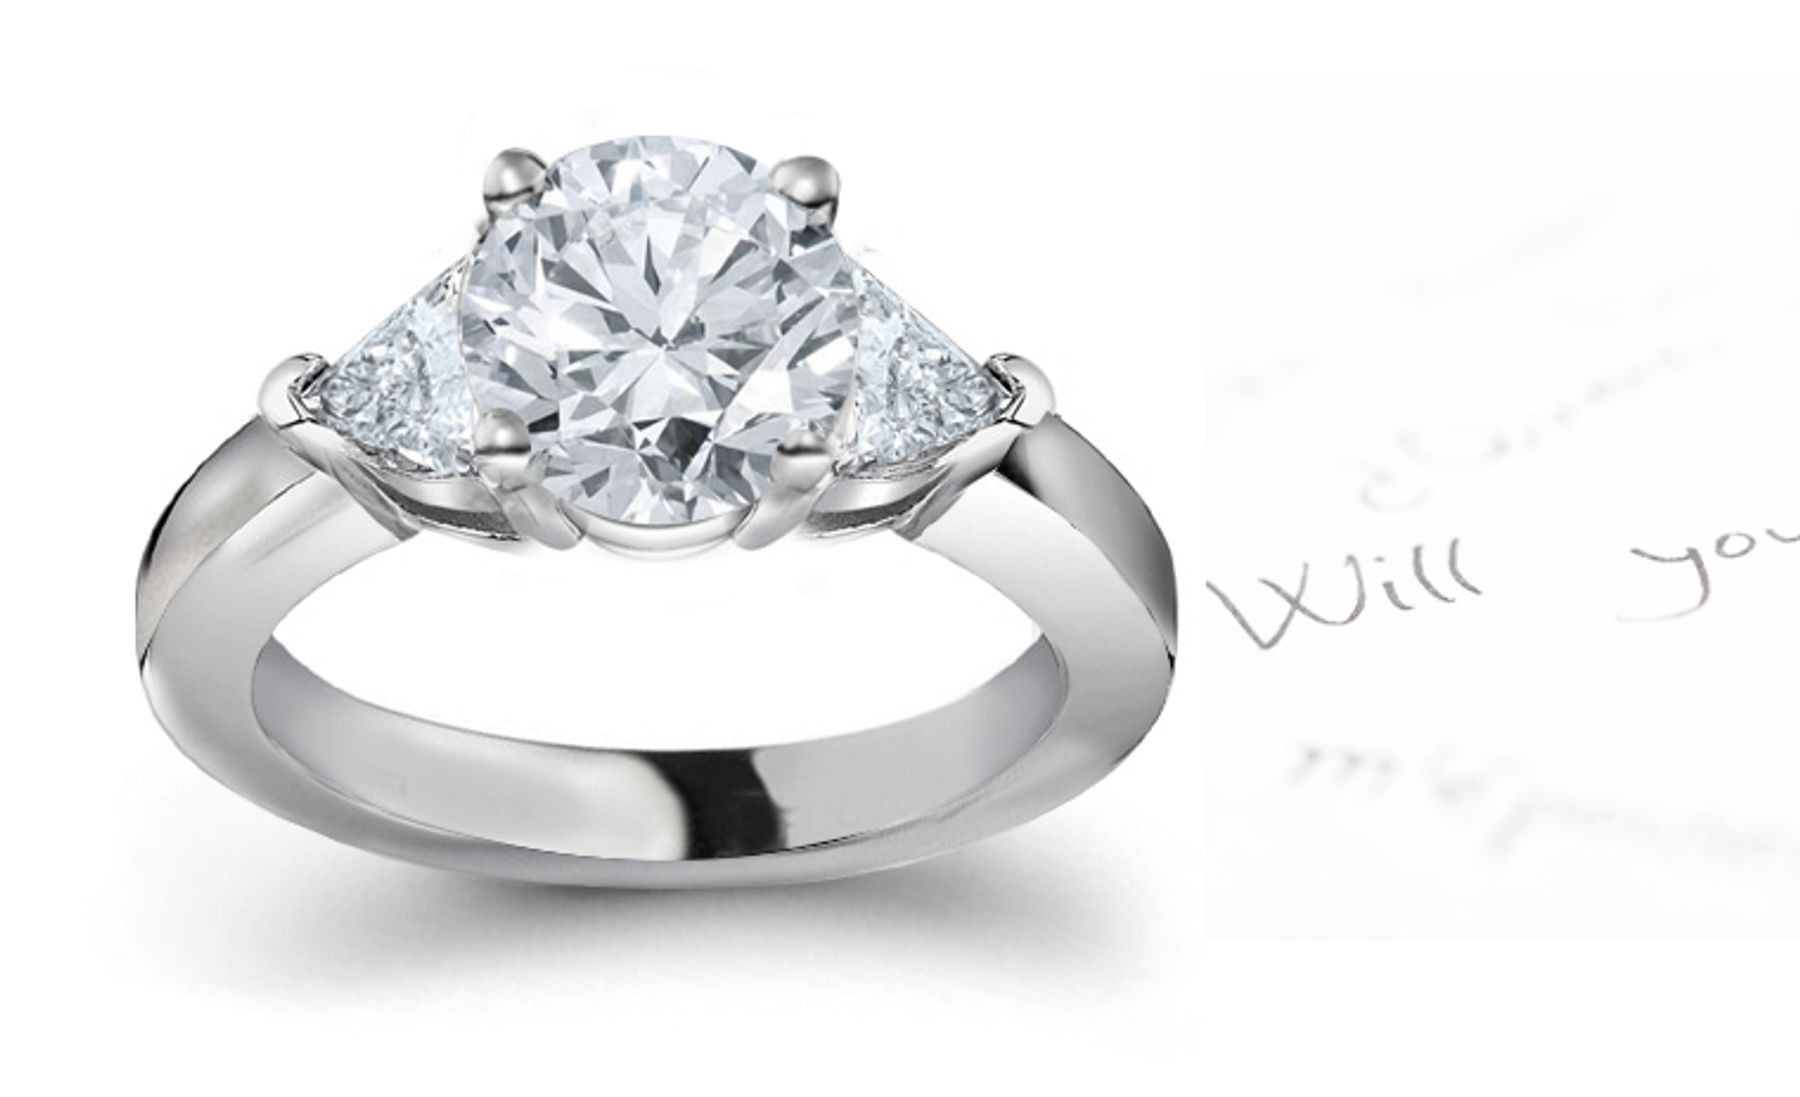 Diamond 3-Stone Ring: 3-Stone (Ring with Round Trillion Diamonds) Rings in Platinum & 14K White Yellow Gold. 